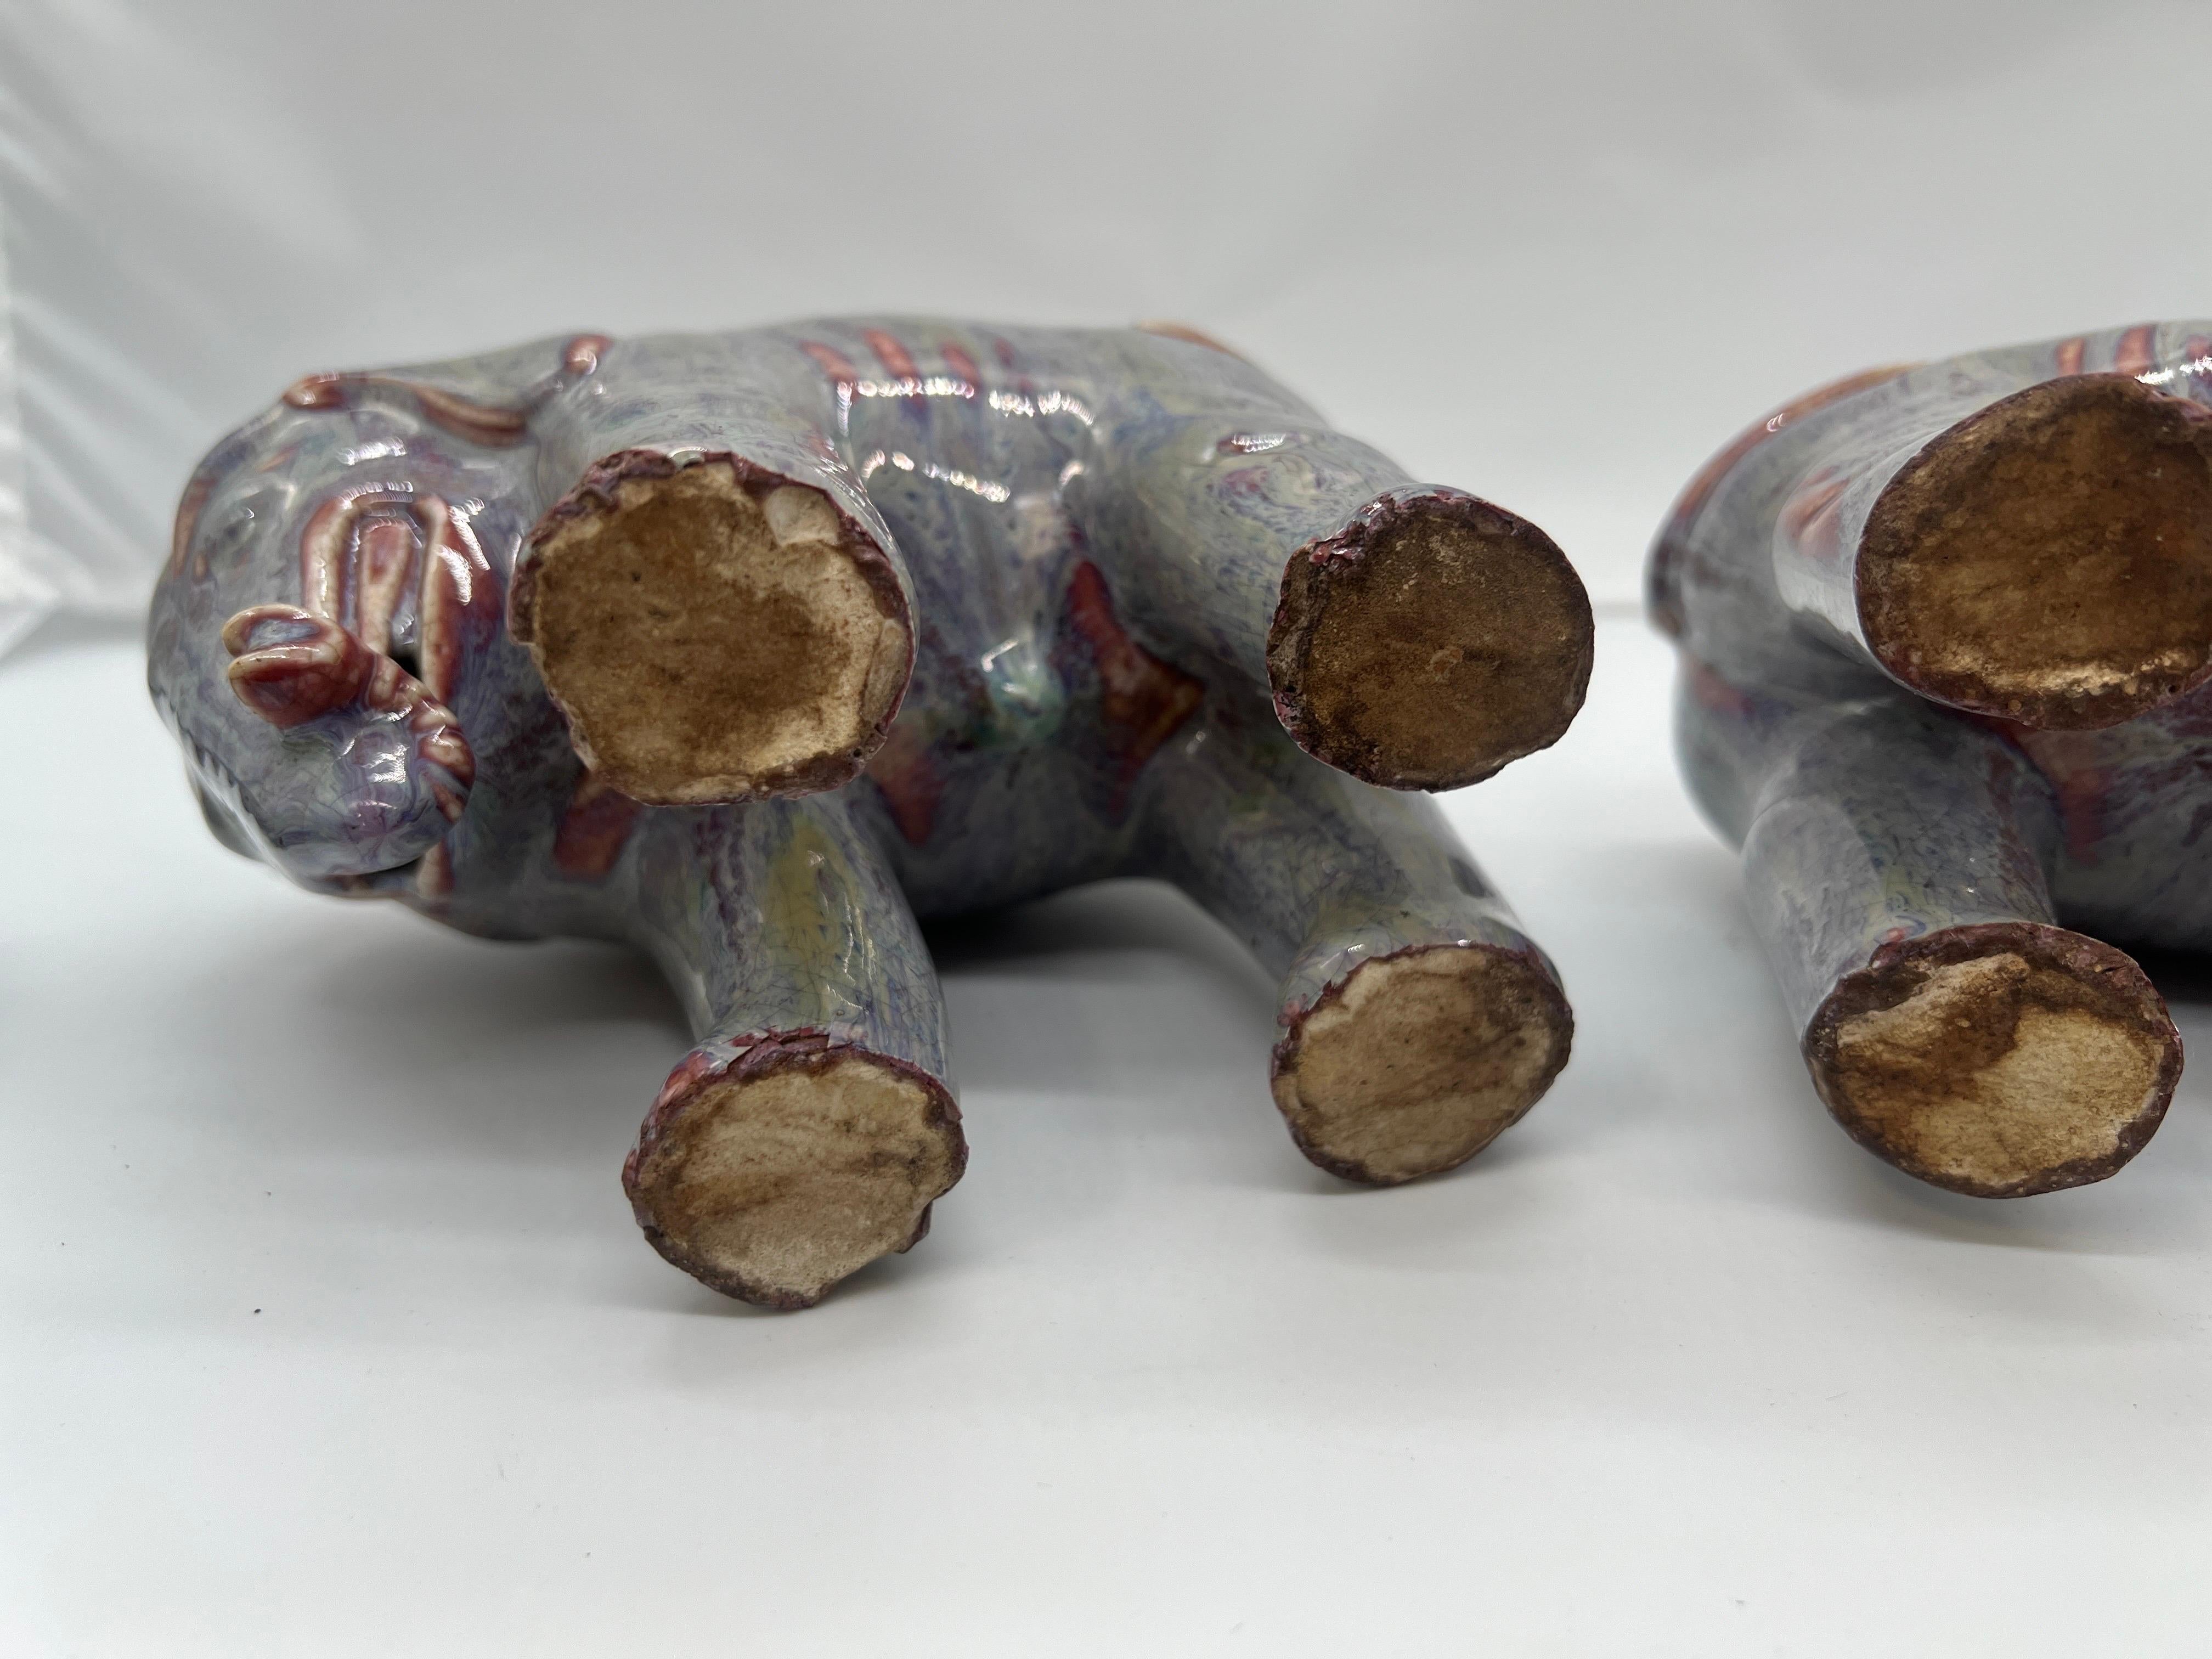 Magnificent Antique Chinese Porcelain Porcelain Flambe Glazed Elephants - Pair For Sale 1